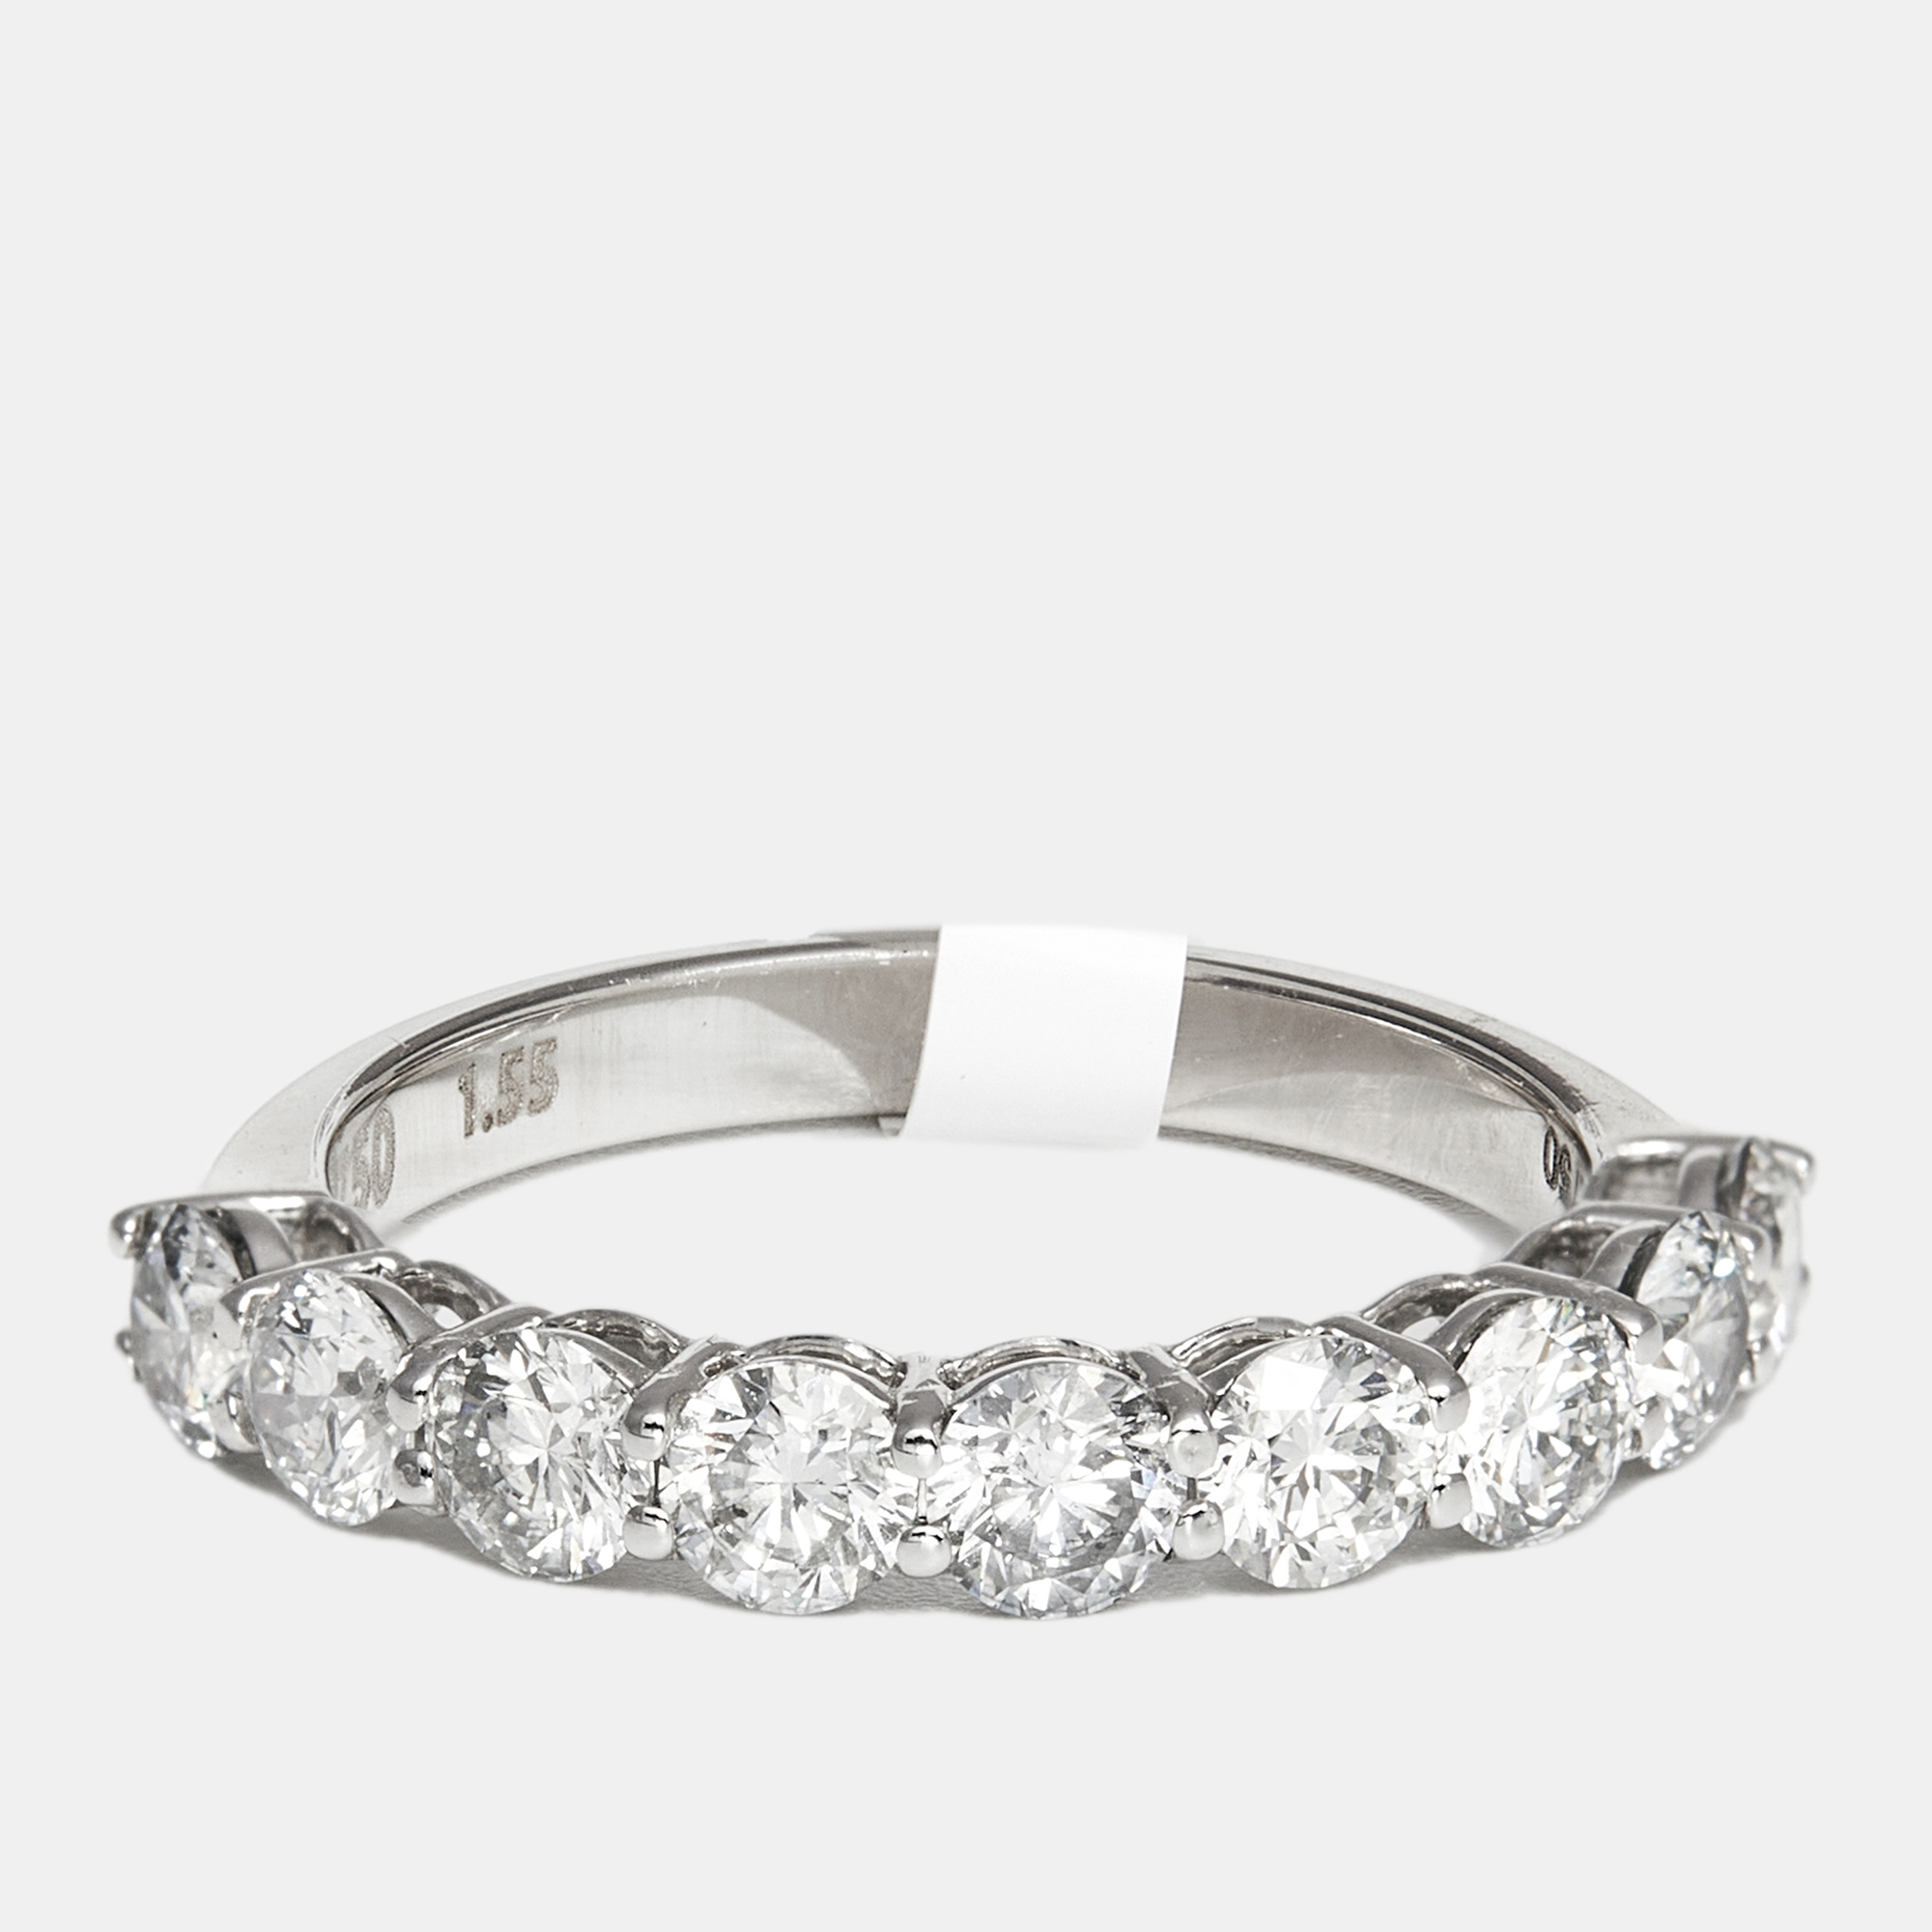 The diamond edit elegant round diamond 1.55 cts 18k white gold half eternity ring size 54